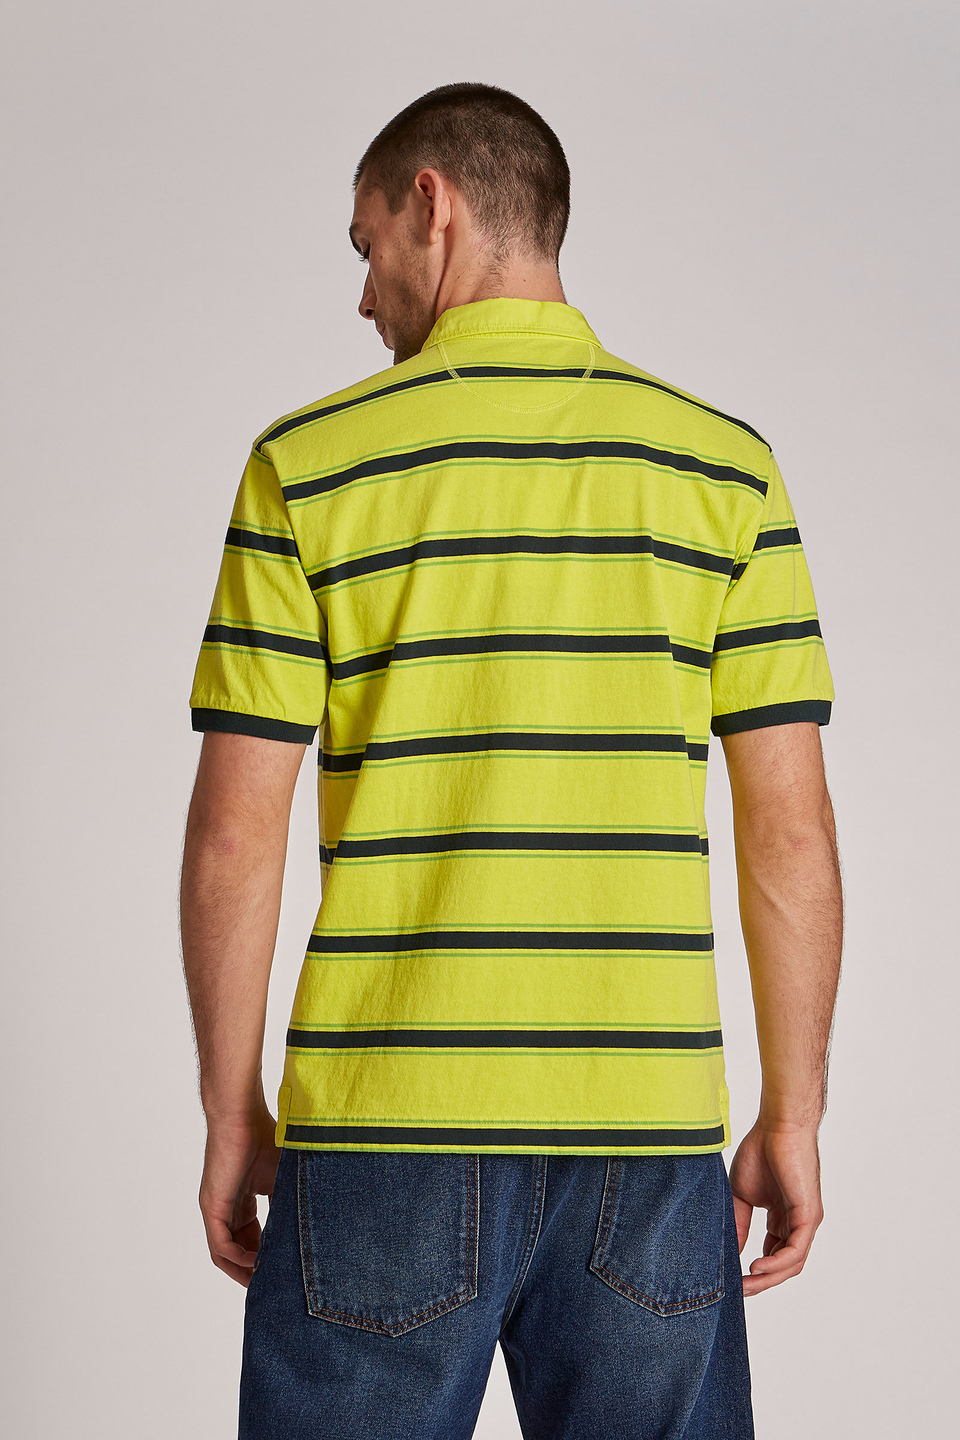 Herren-Poloshirt mit kurzem Arm aus 100 % Baumwolle, oversized Modell | La Martina - Official Online Shop